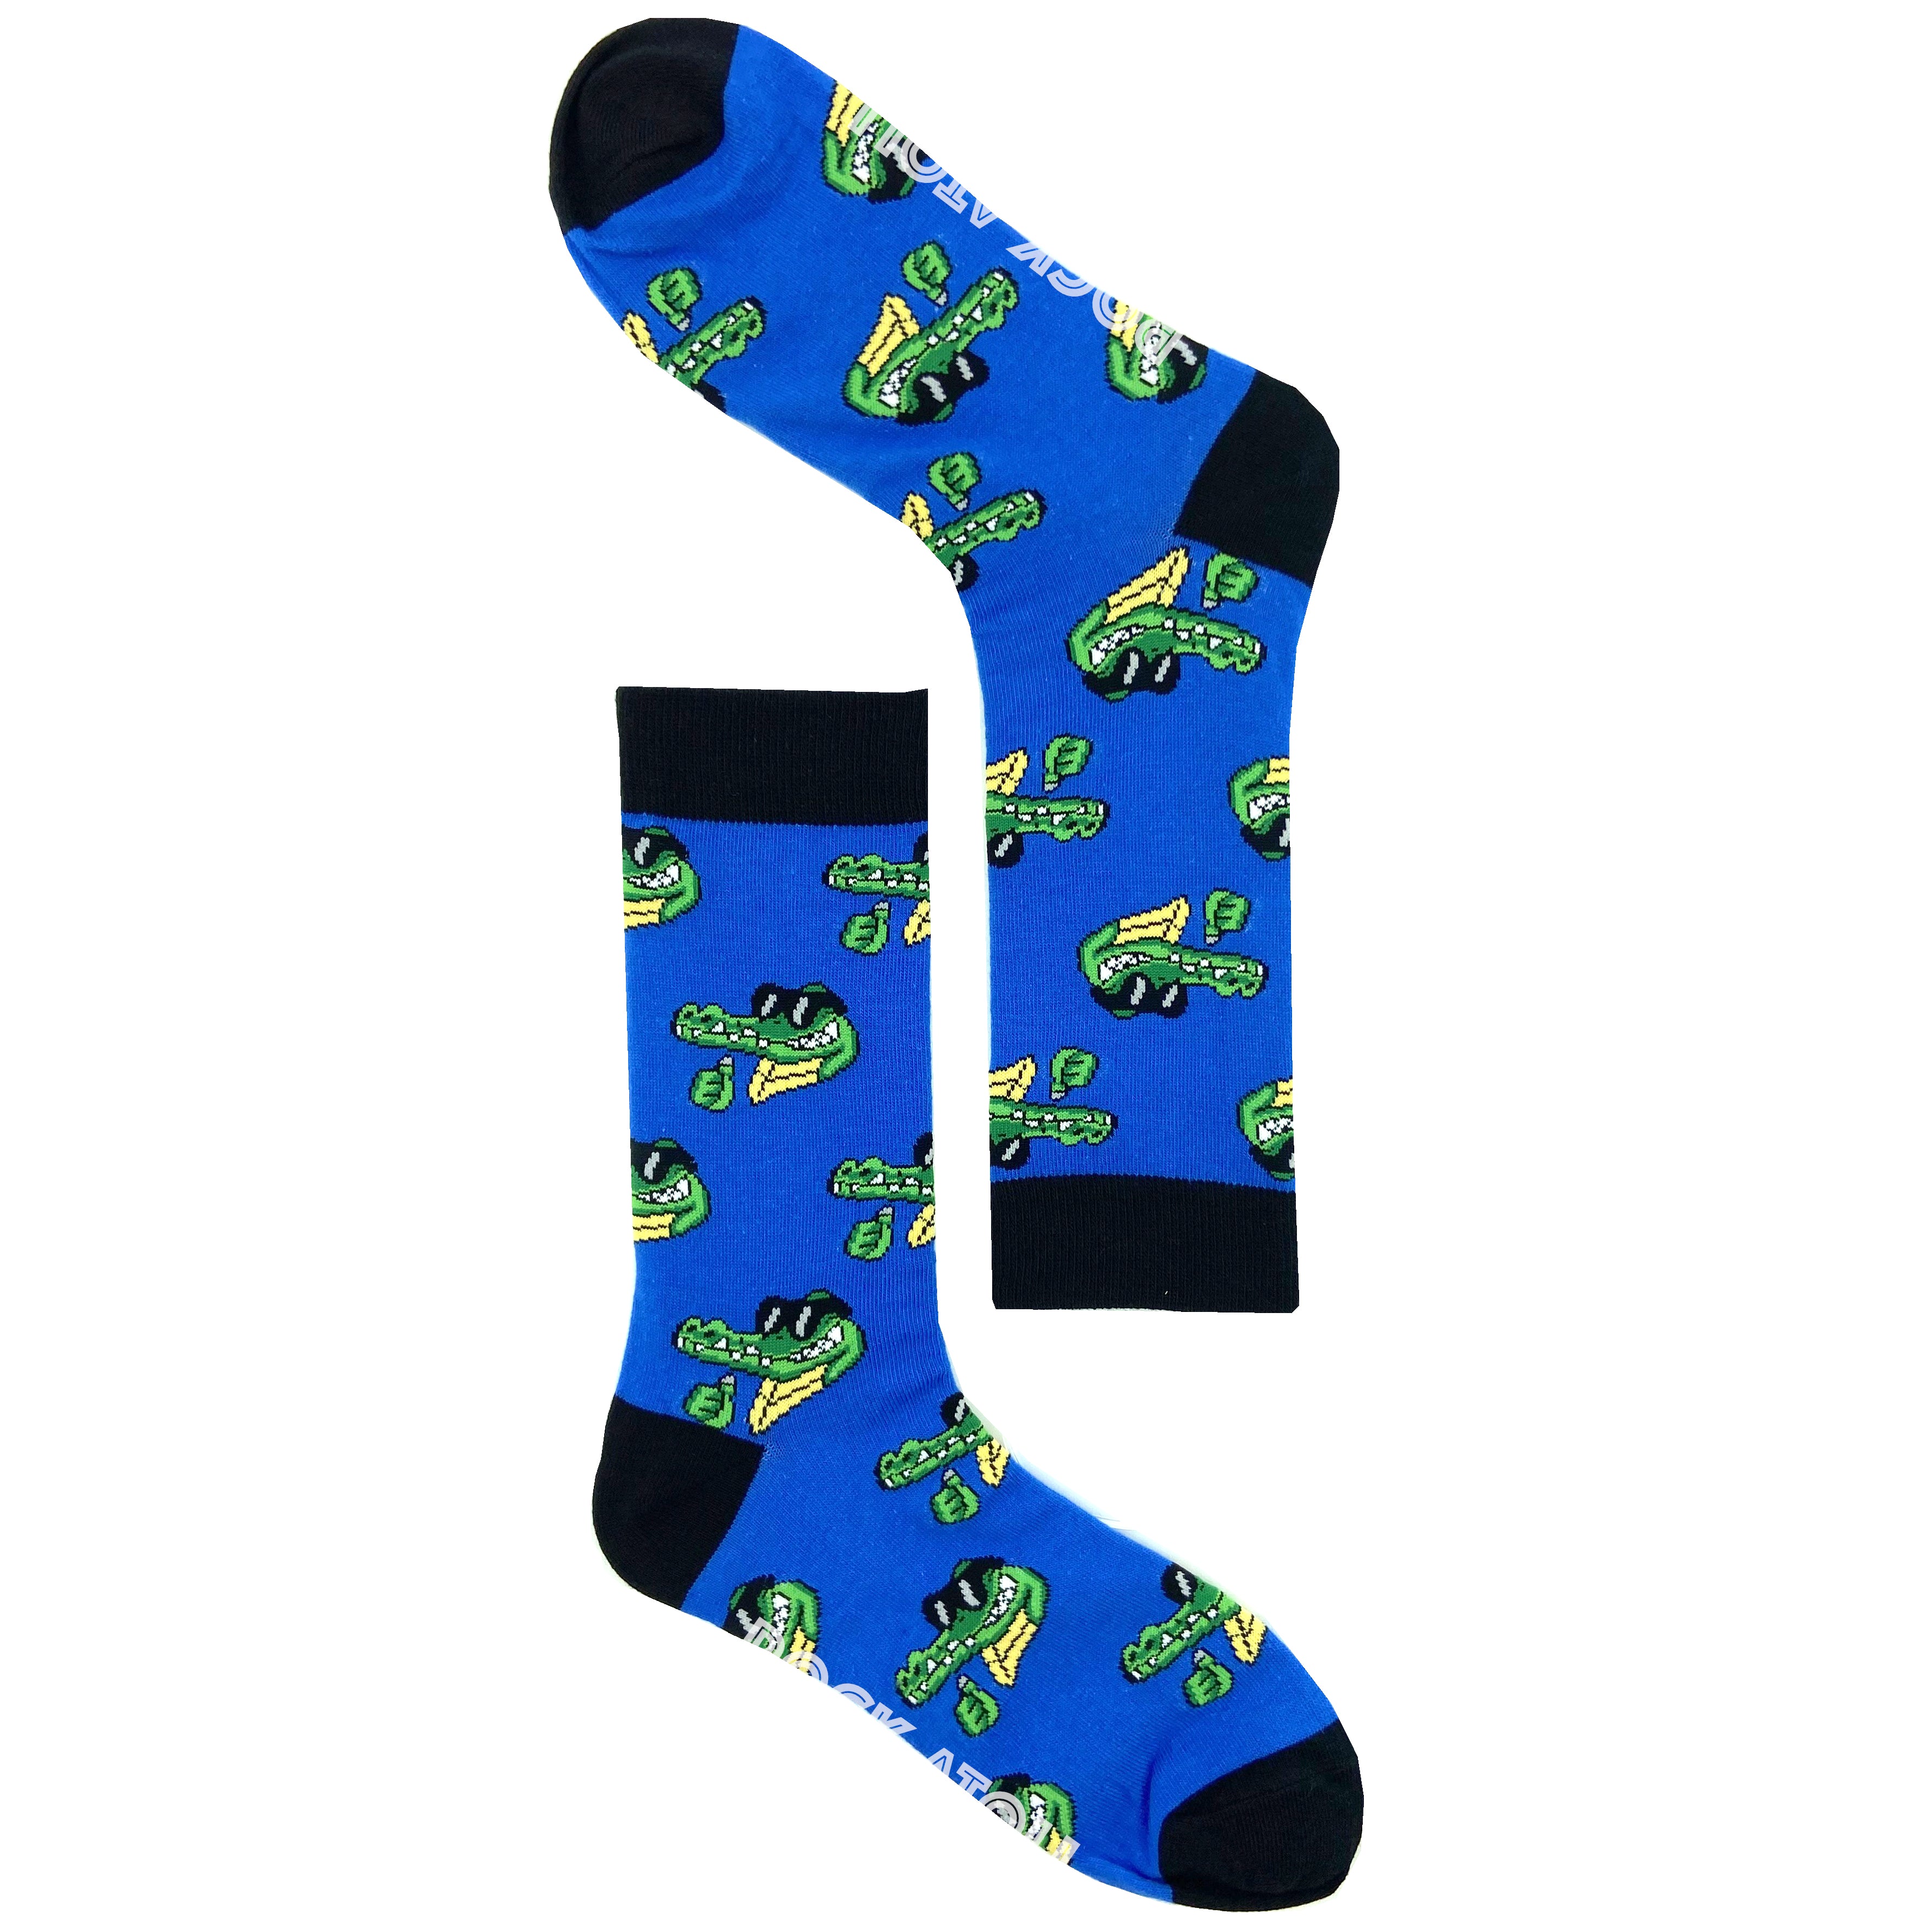 Bright Blue Cool Crocodile Alligator Reptile Patterned Novelty Socks